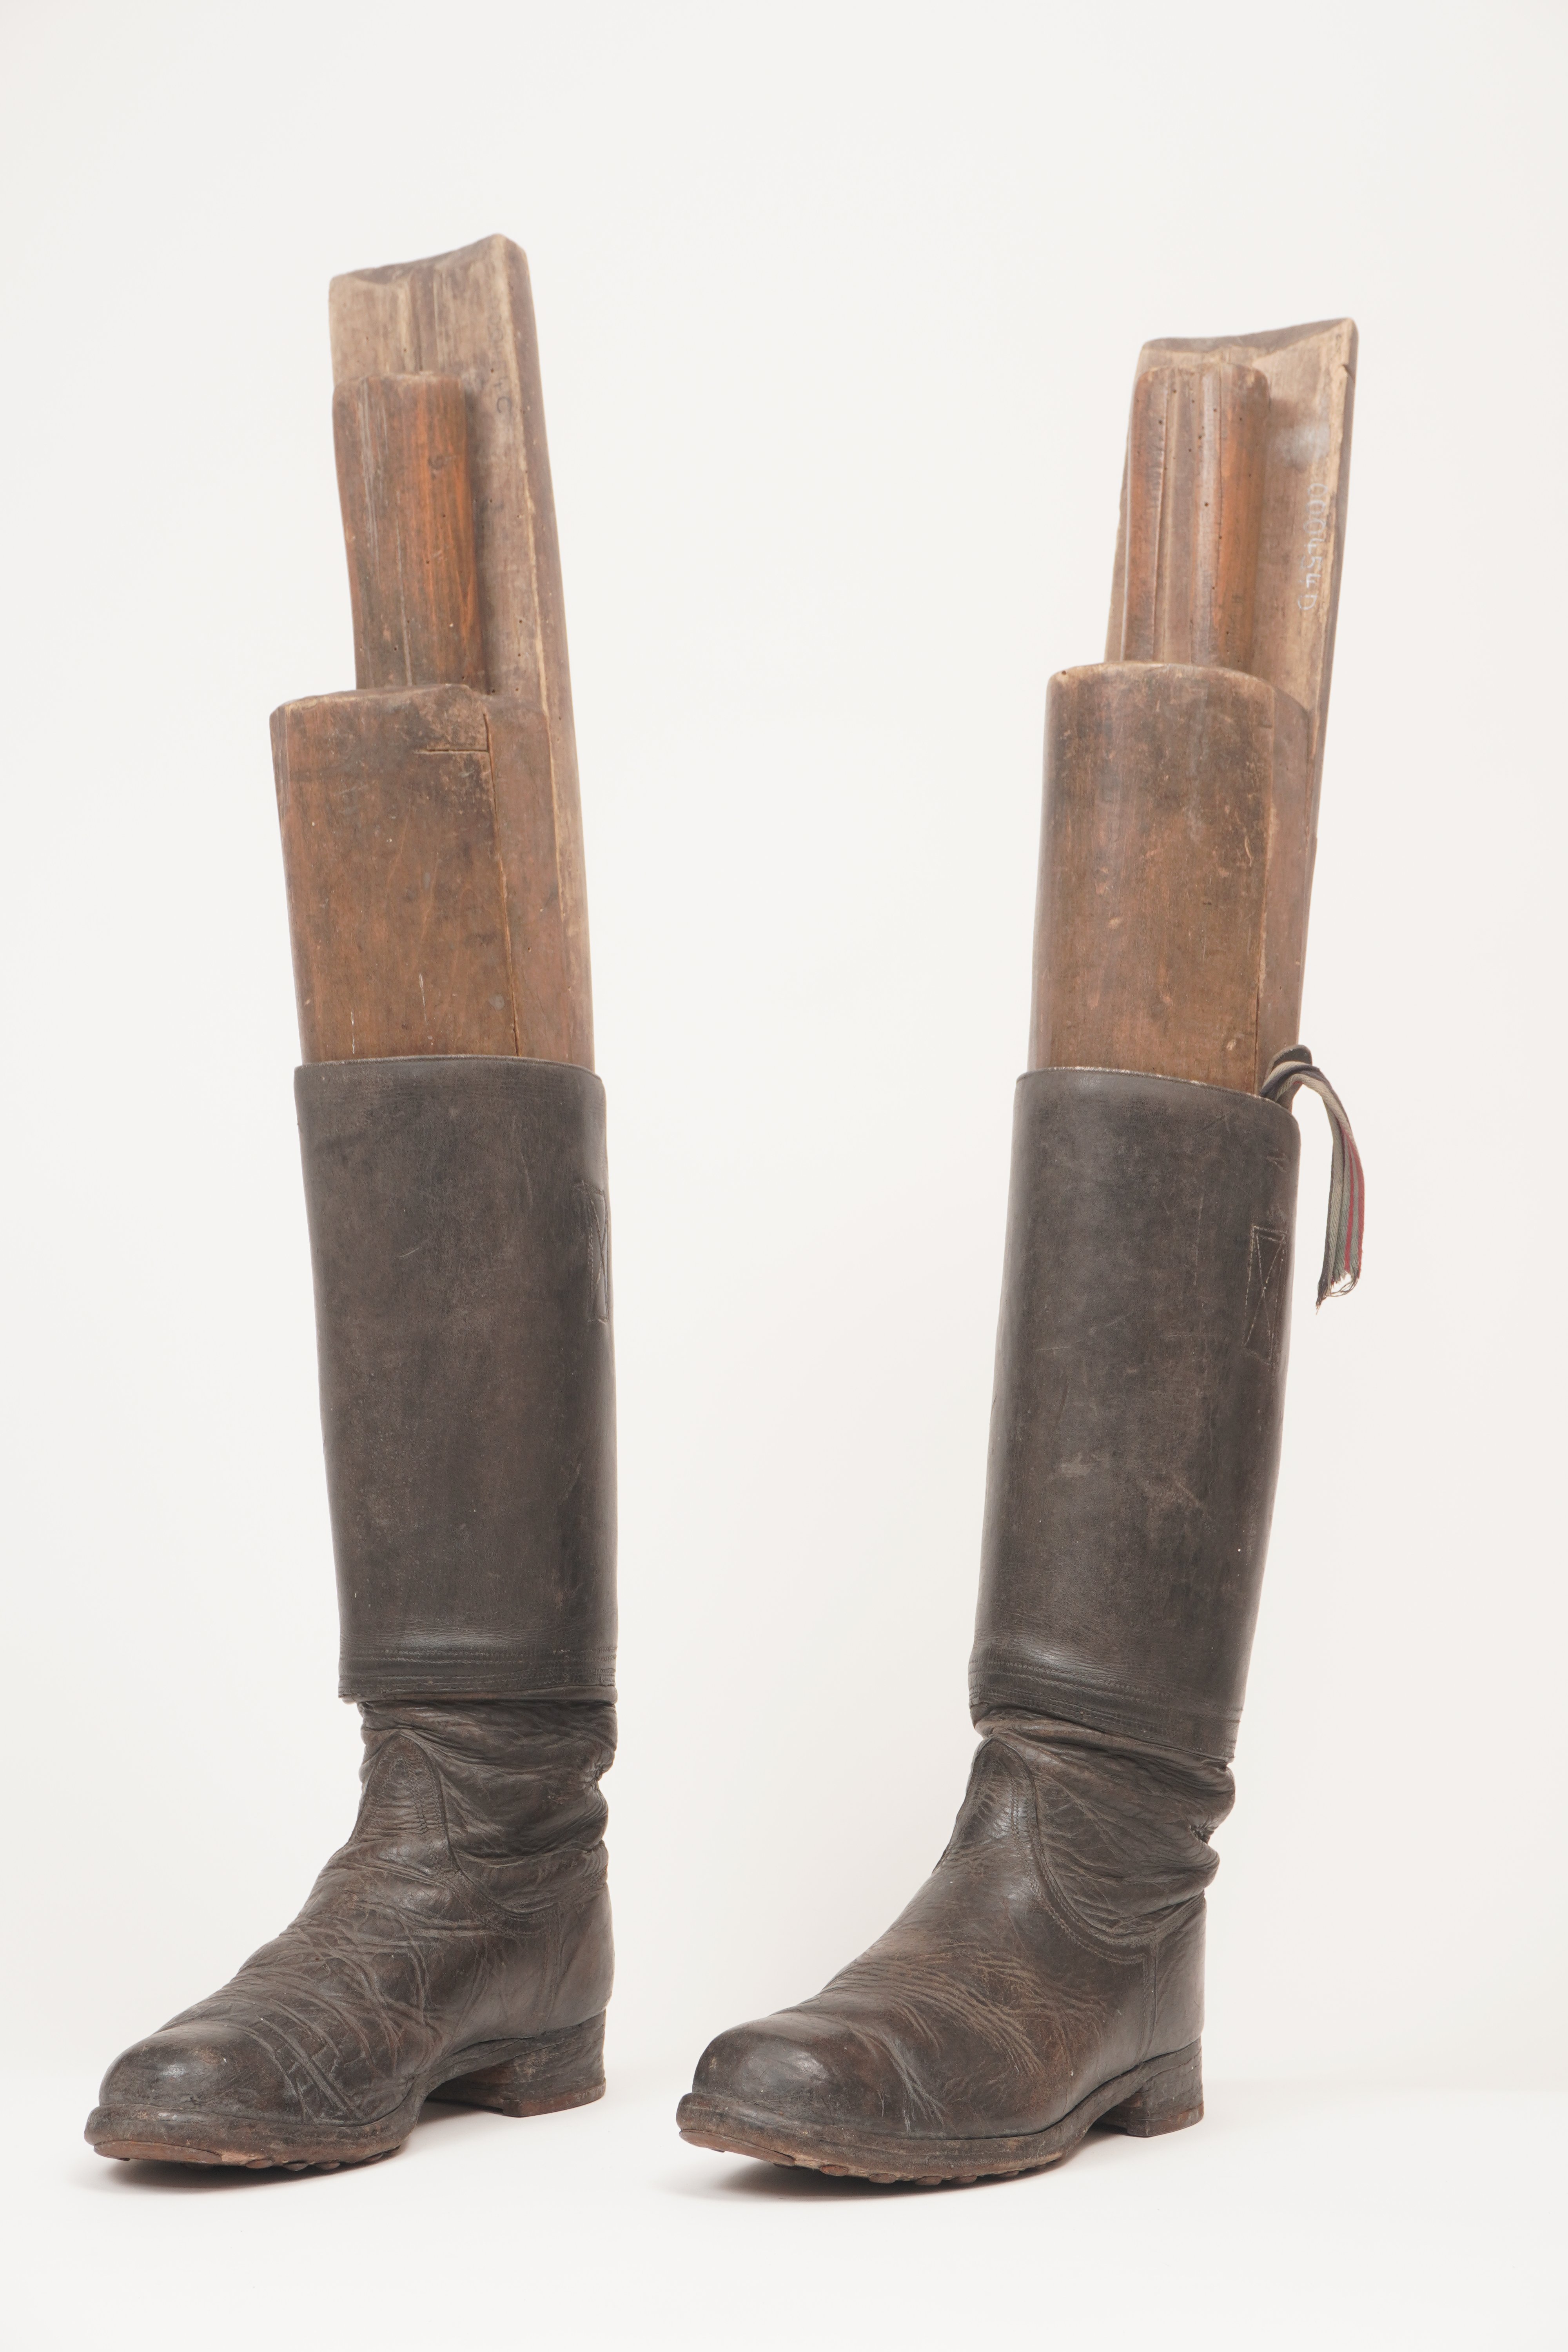 Stiefel aus Leder mit Schuhspanner (Förderkreis Unterjesinger Kelter e.V. CC BY-NC-SA)